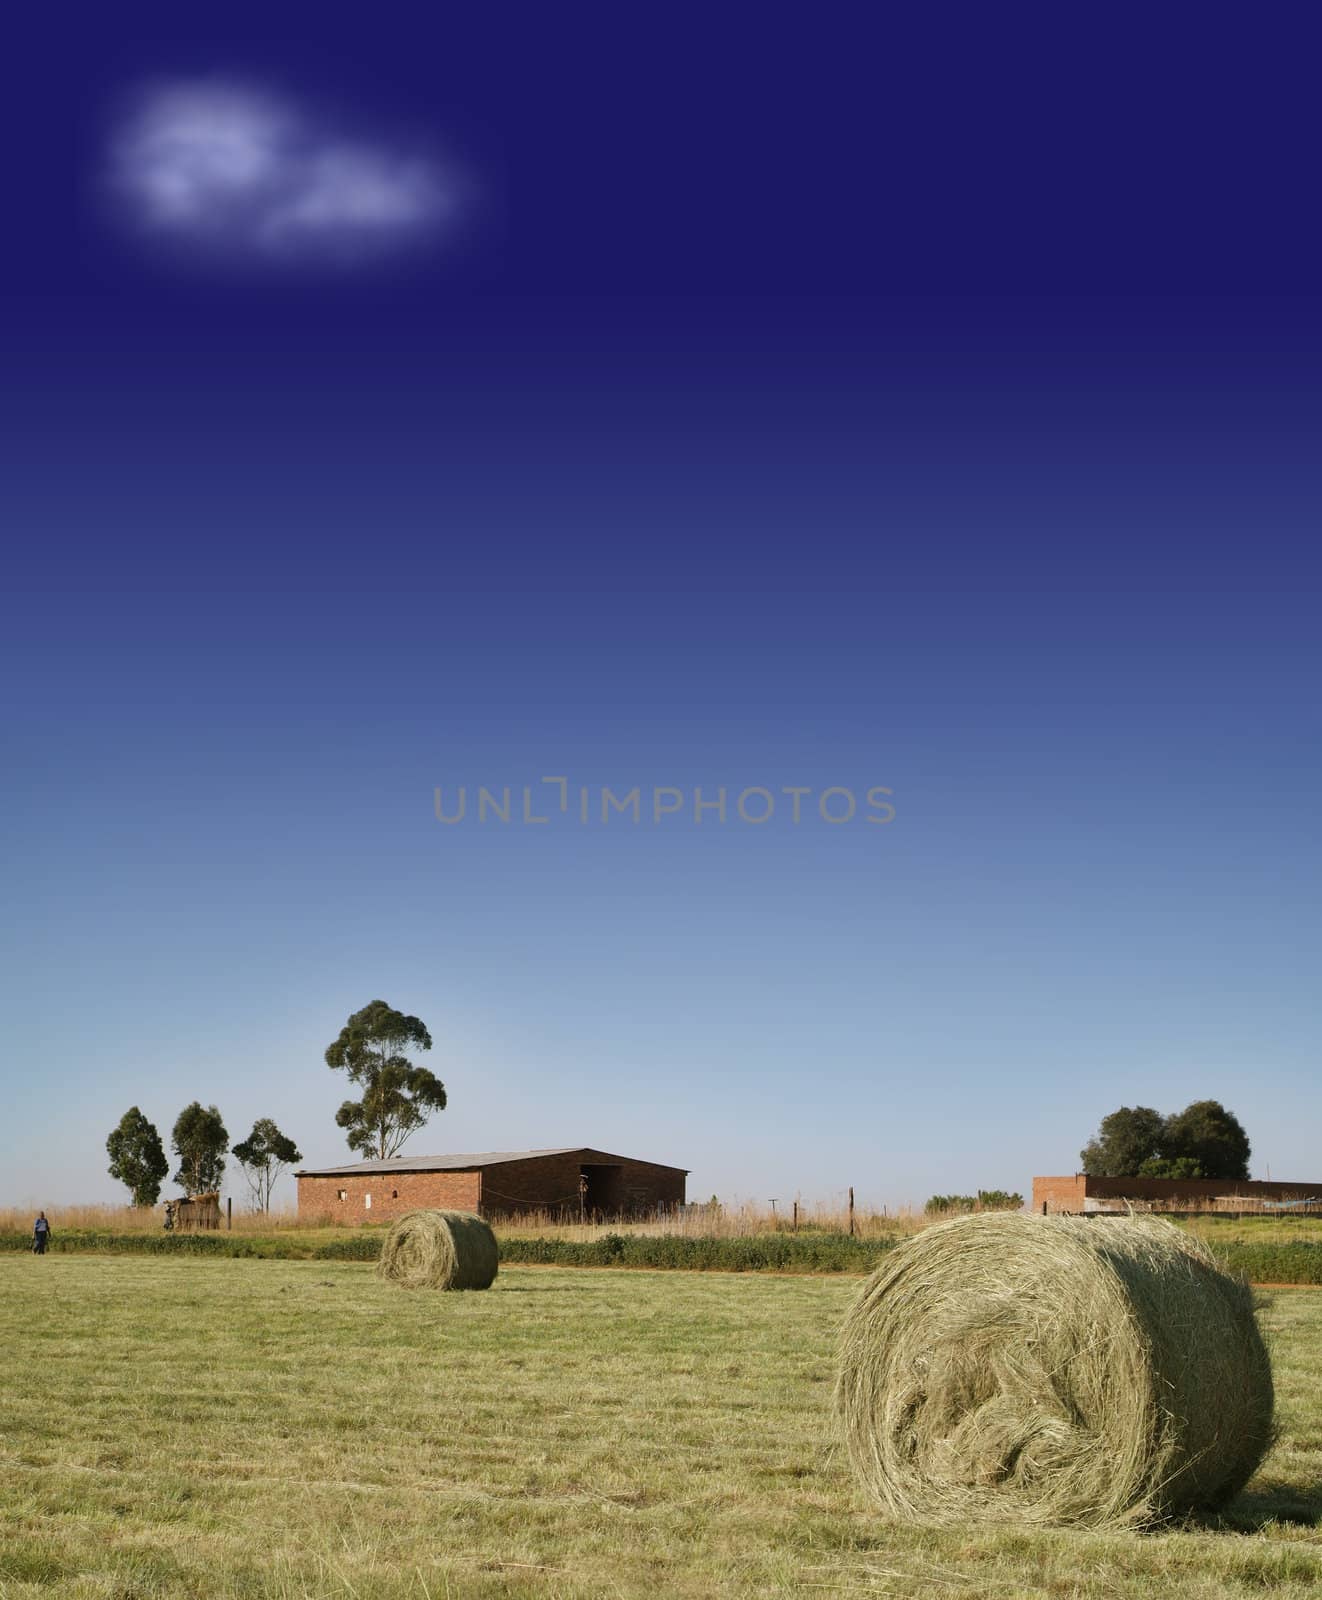 Colour farm scene with hay bails, farm house, farm worker, trees, barn and deep blue African sky with white cloud